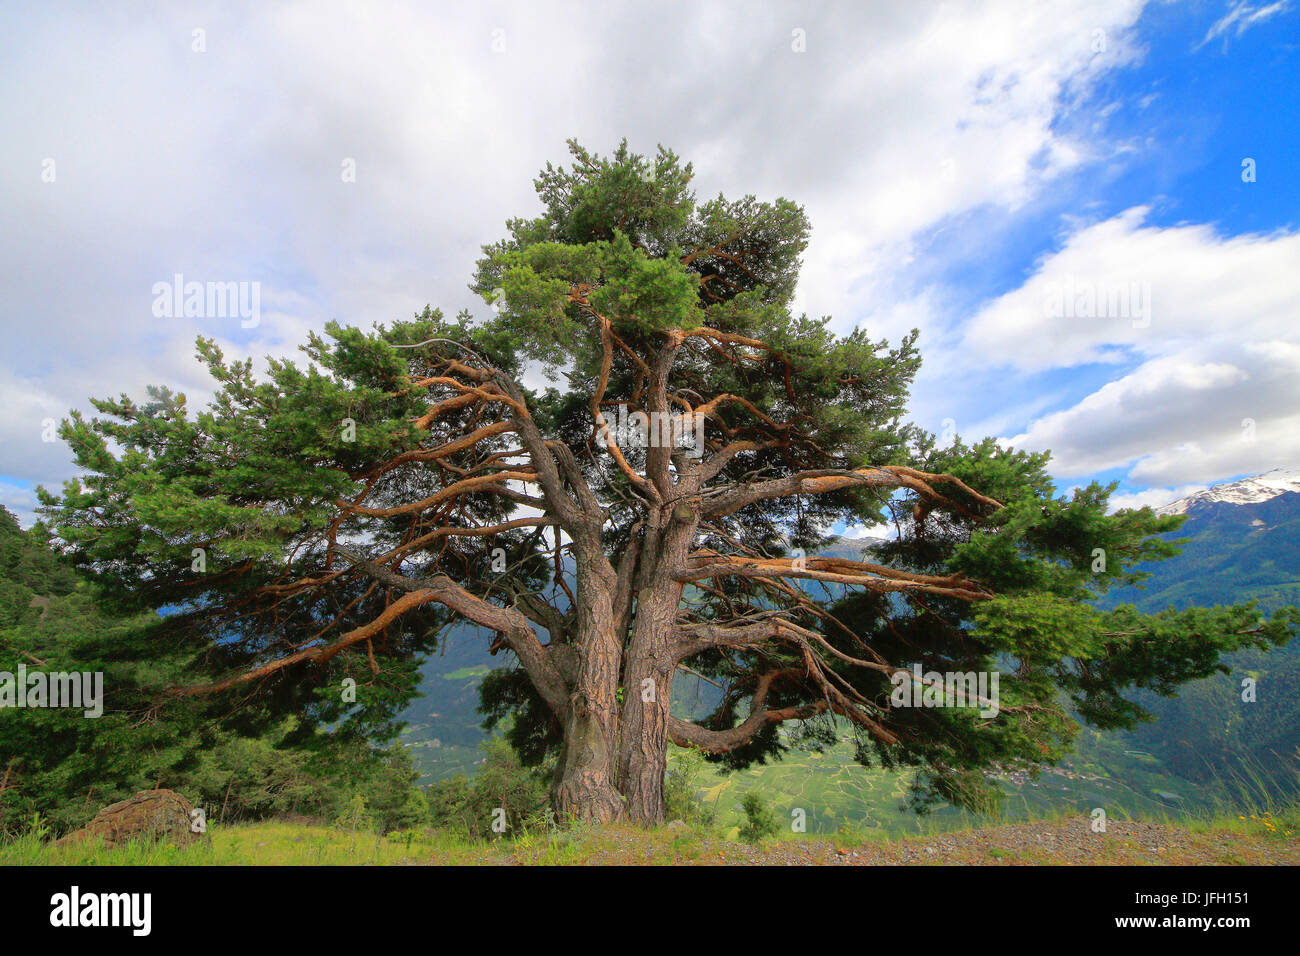 Swiss pine, Pinus cembra, in the alps Stock Photo